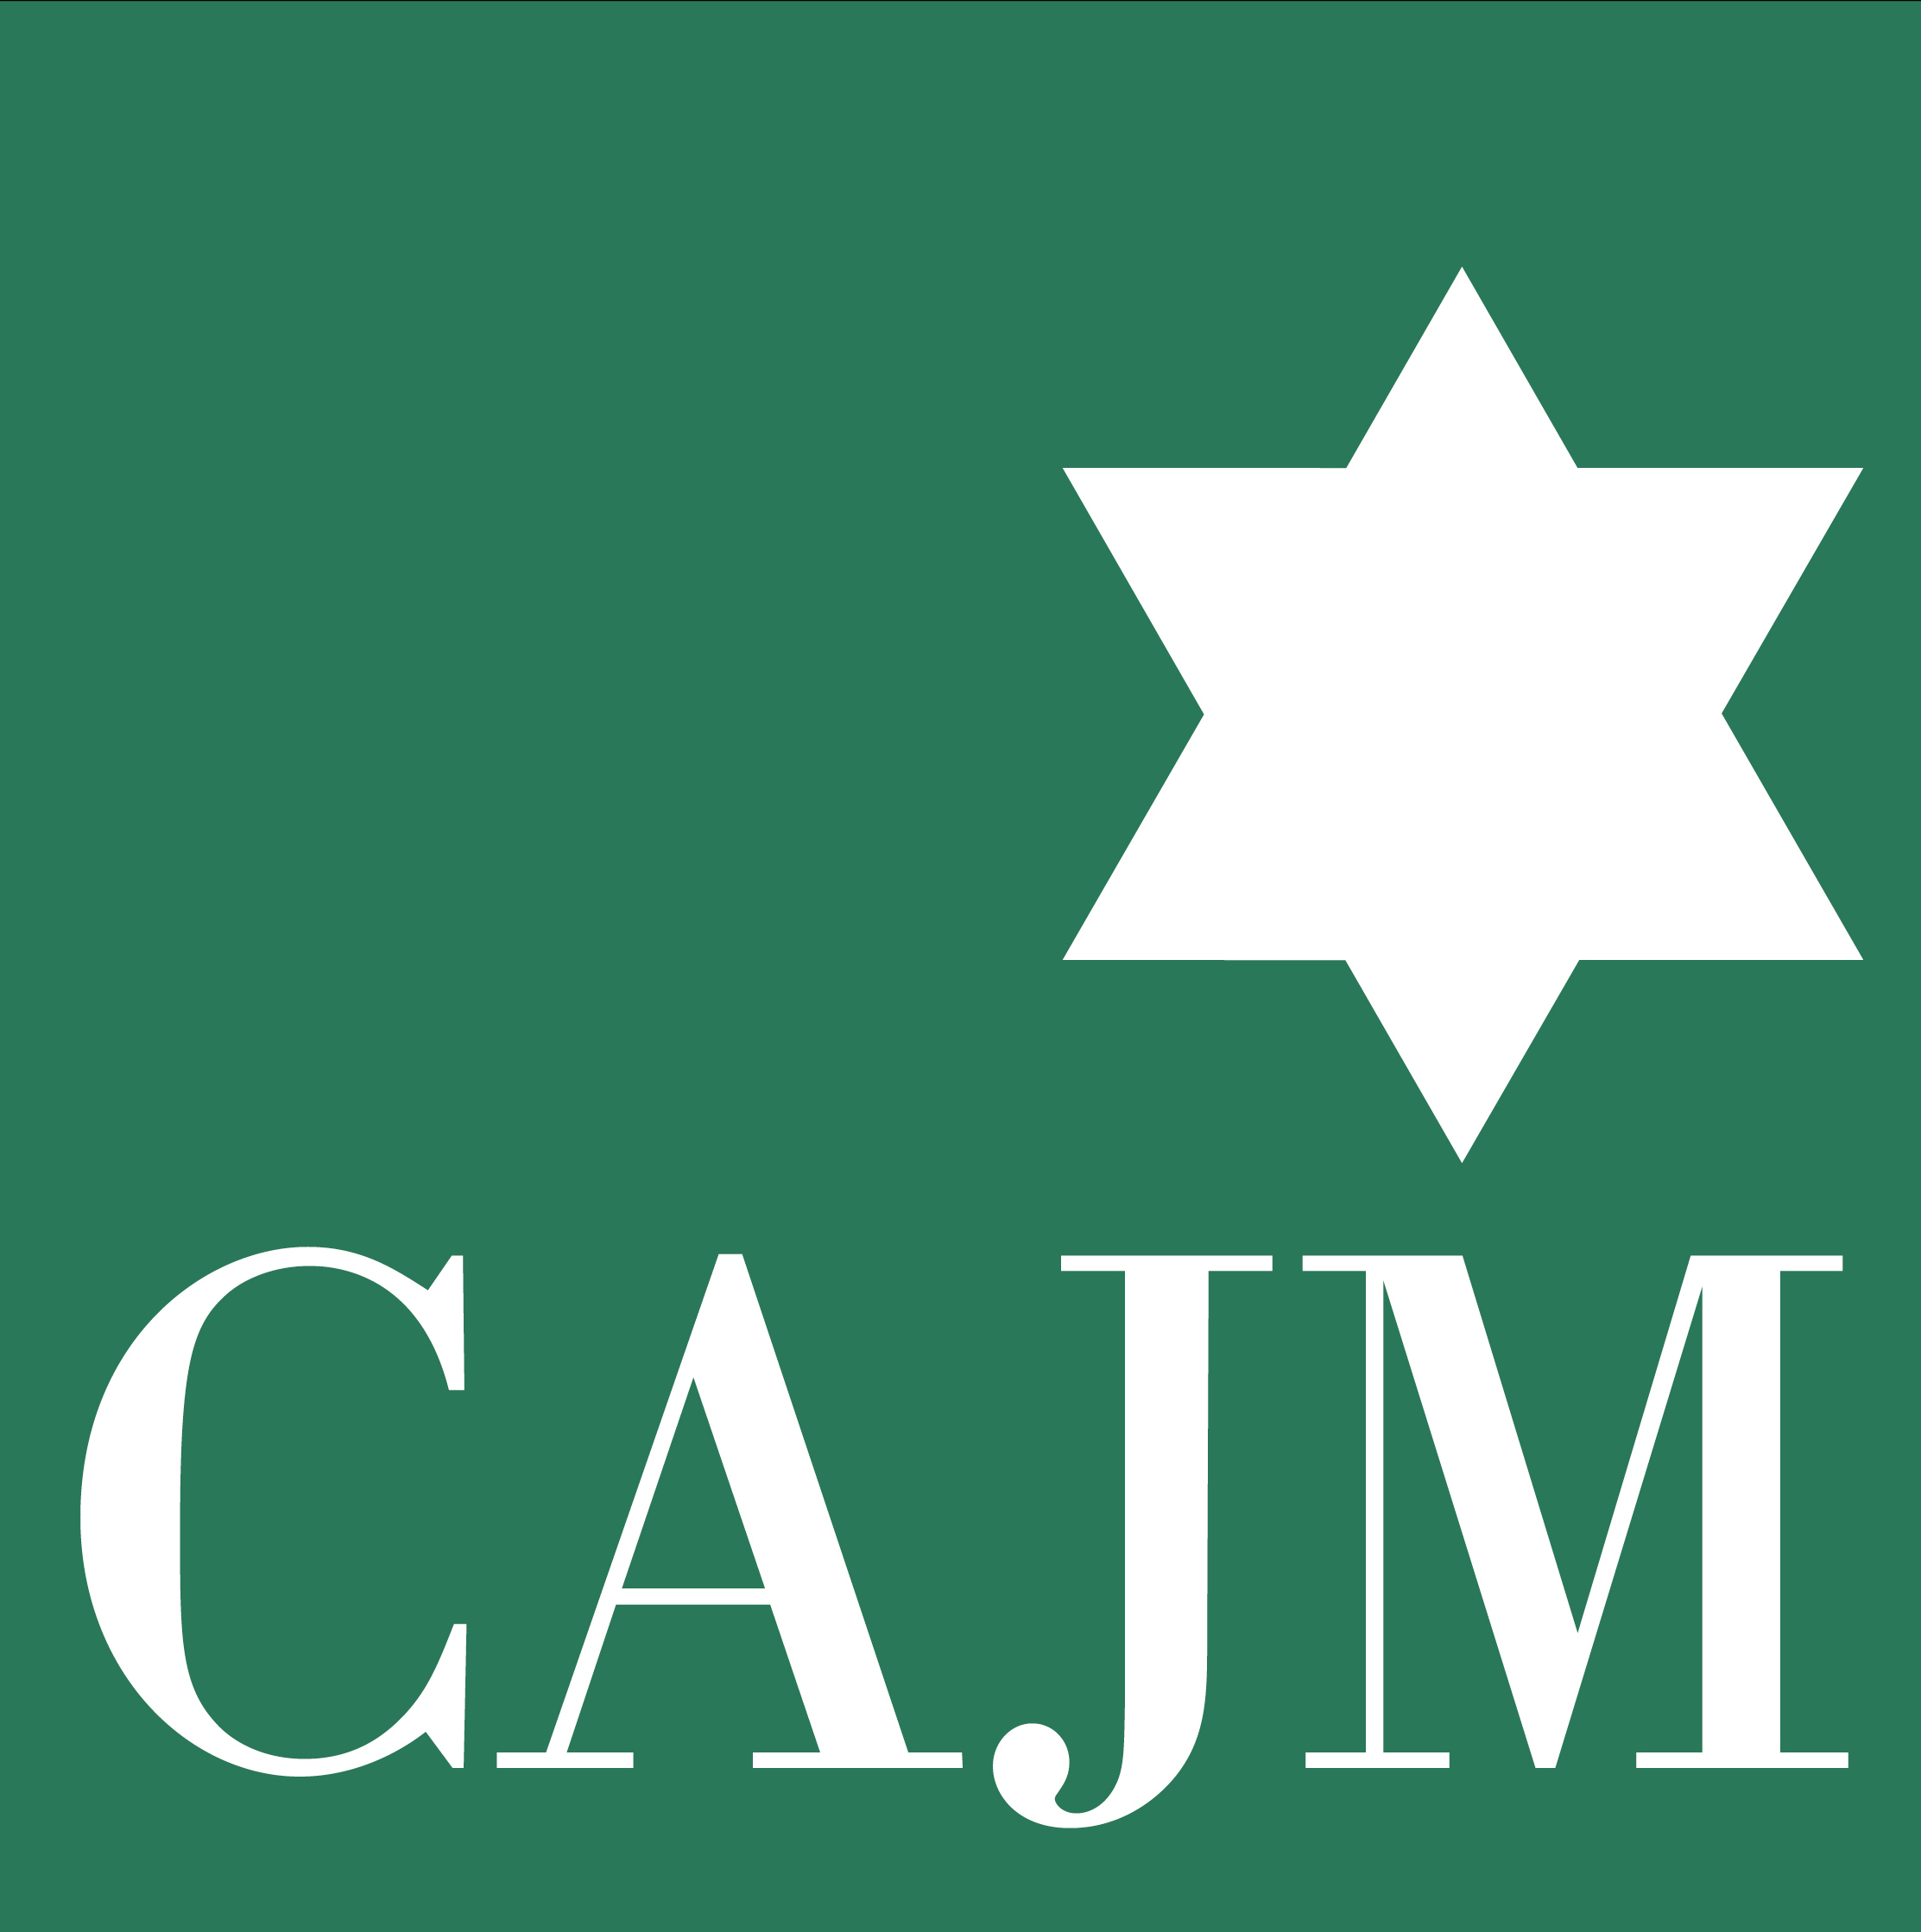 Council of American Jewish Museums (CAJM)